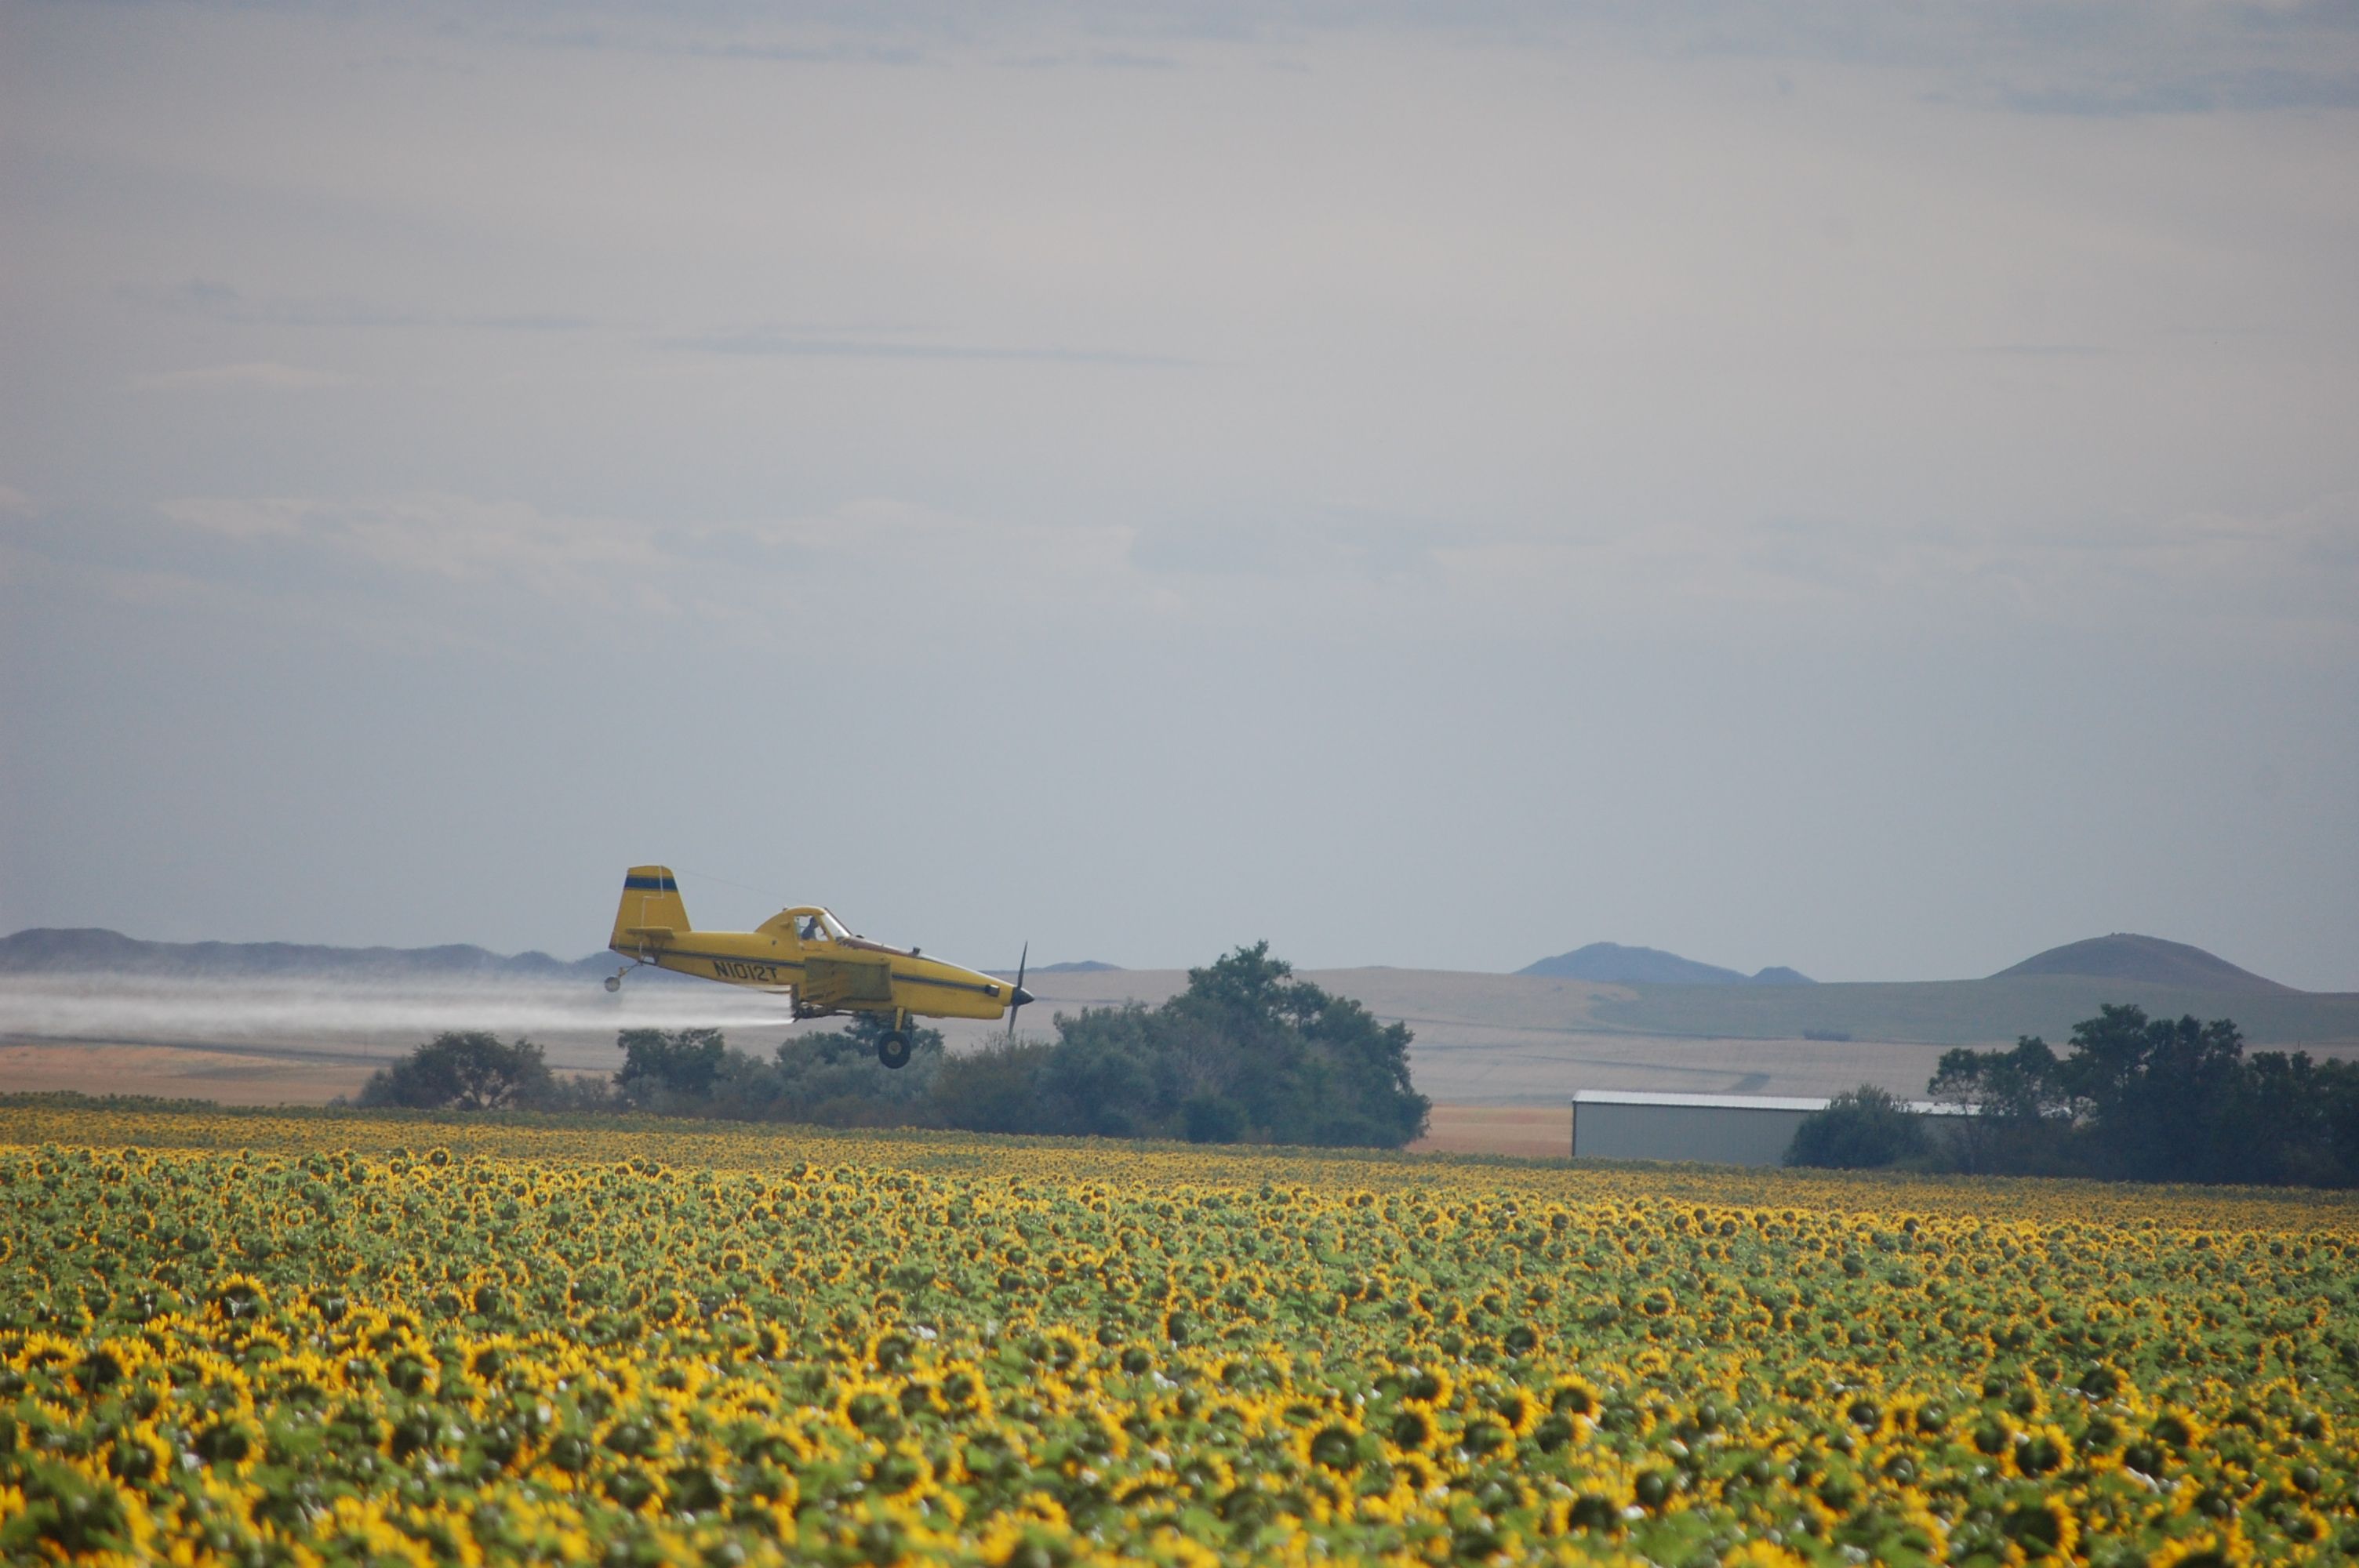 N1012T — - Air Tractor dusting sunflower field in North Dakota